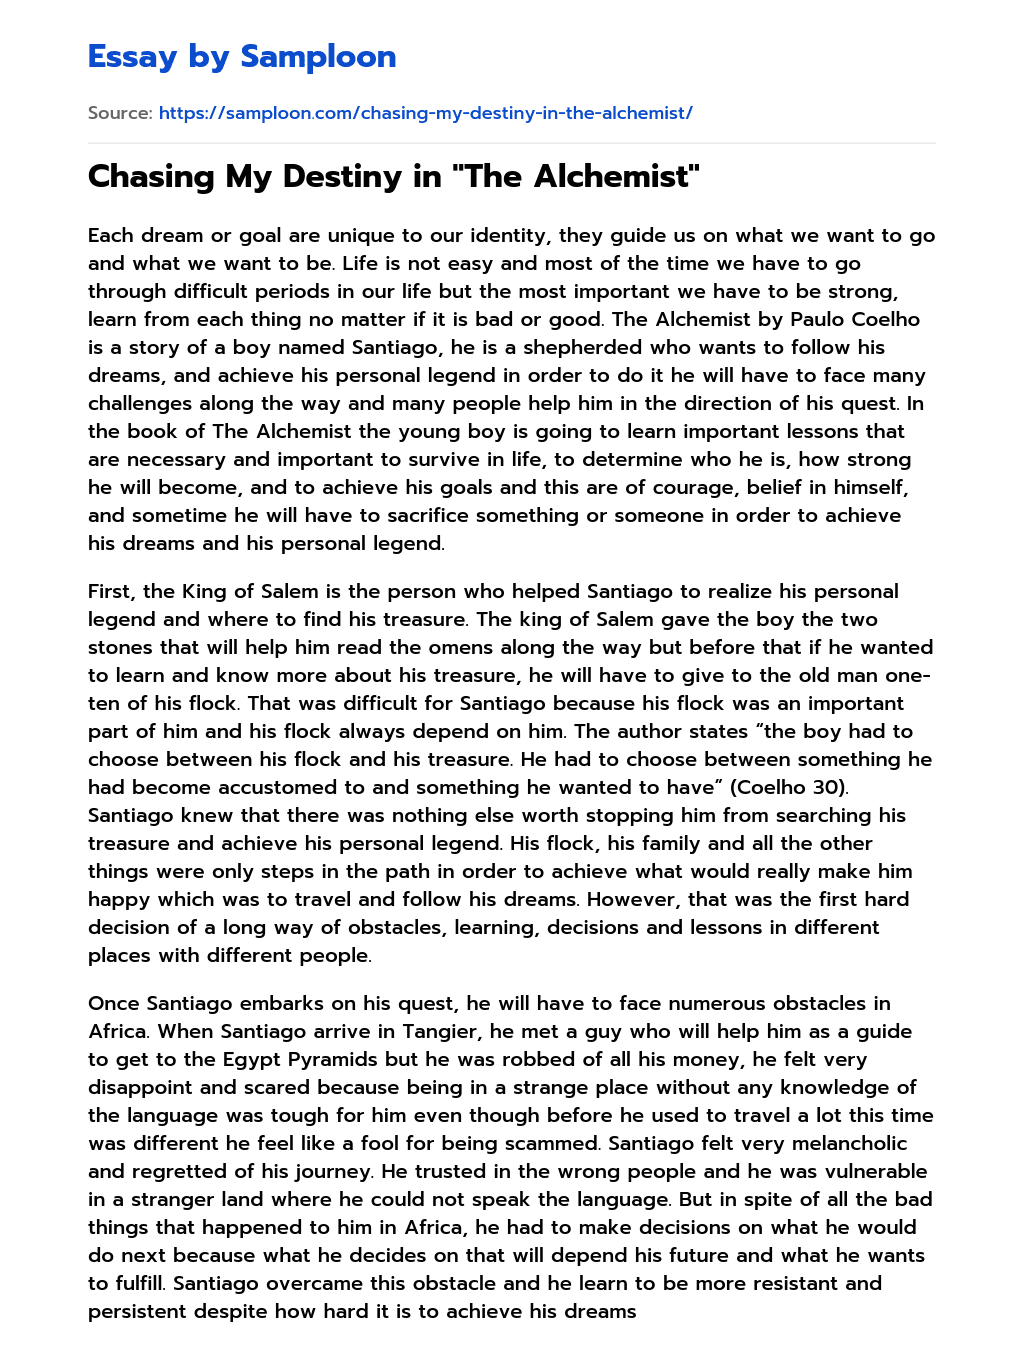 Chasing My Destiny in “The Alchemist” essay